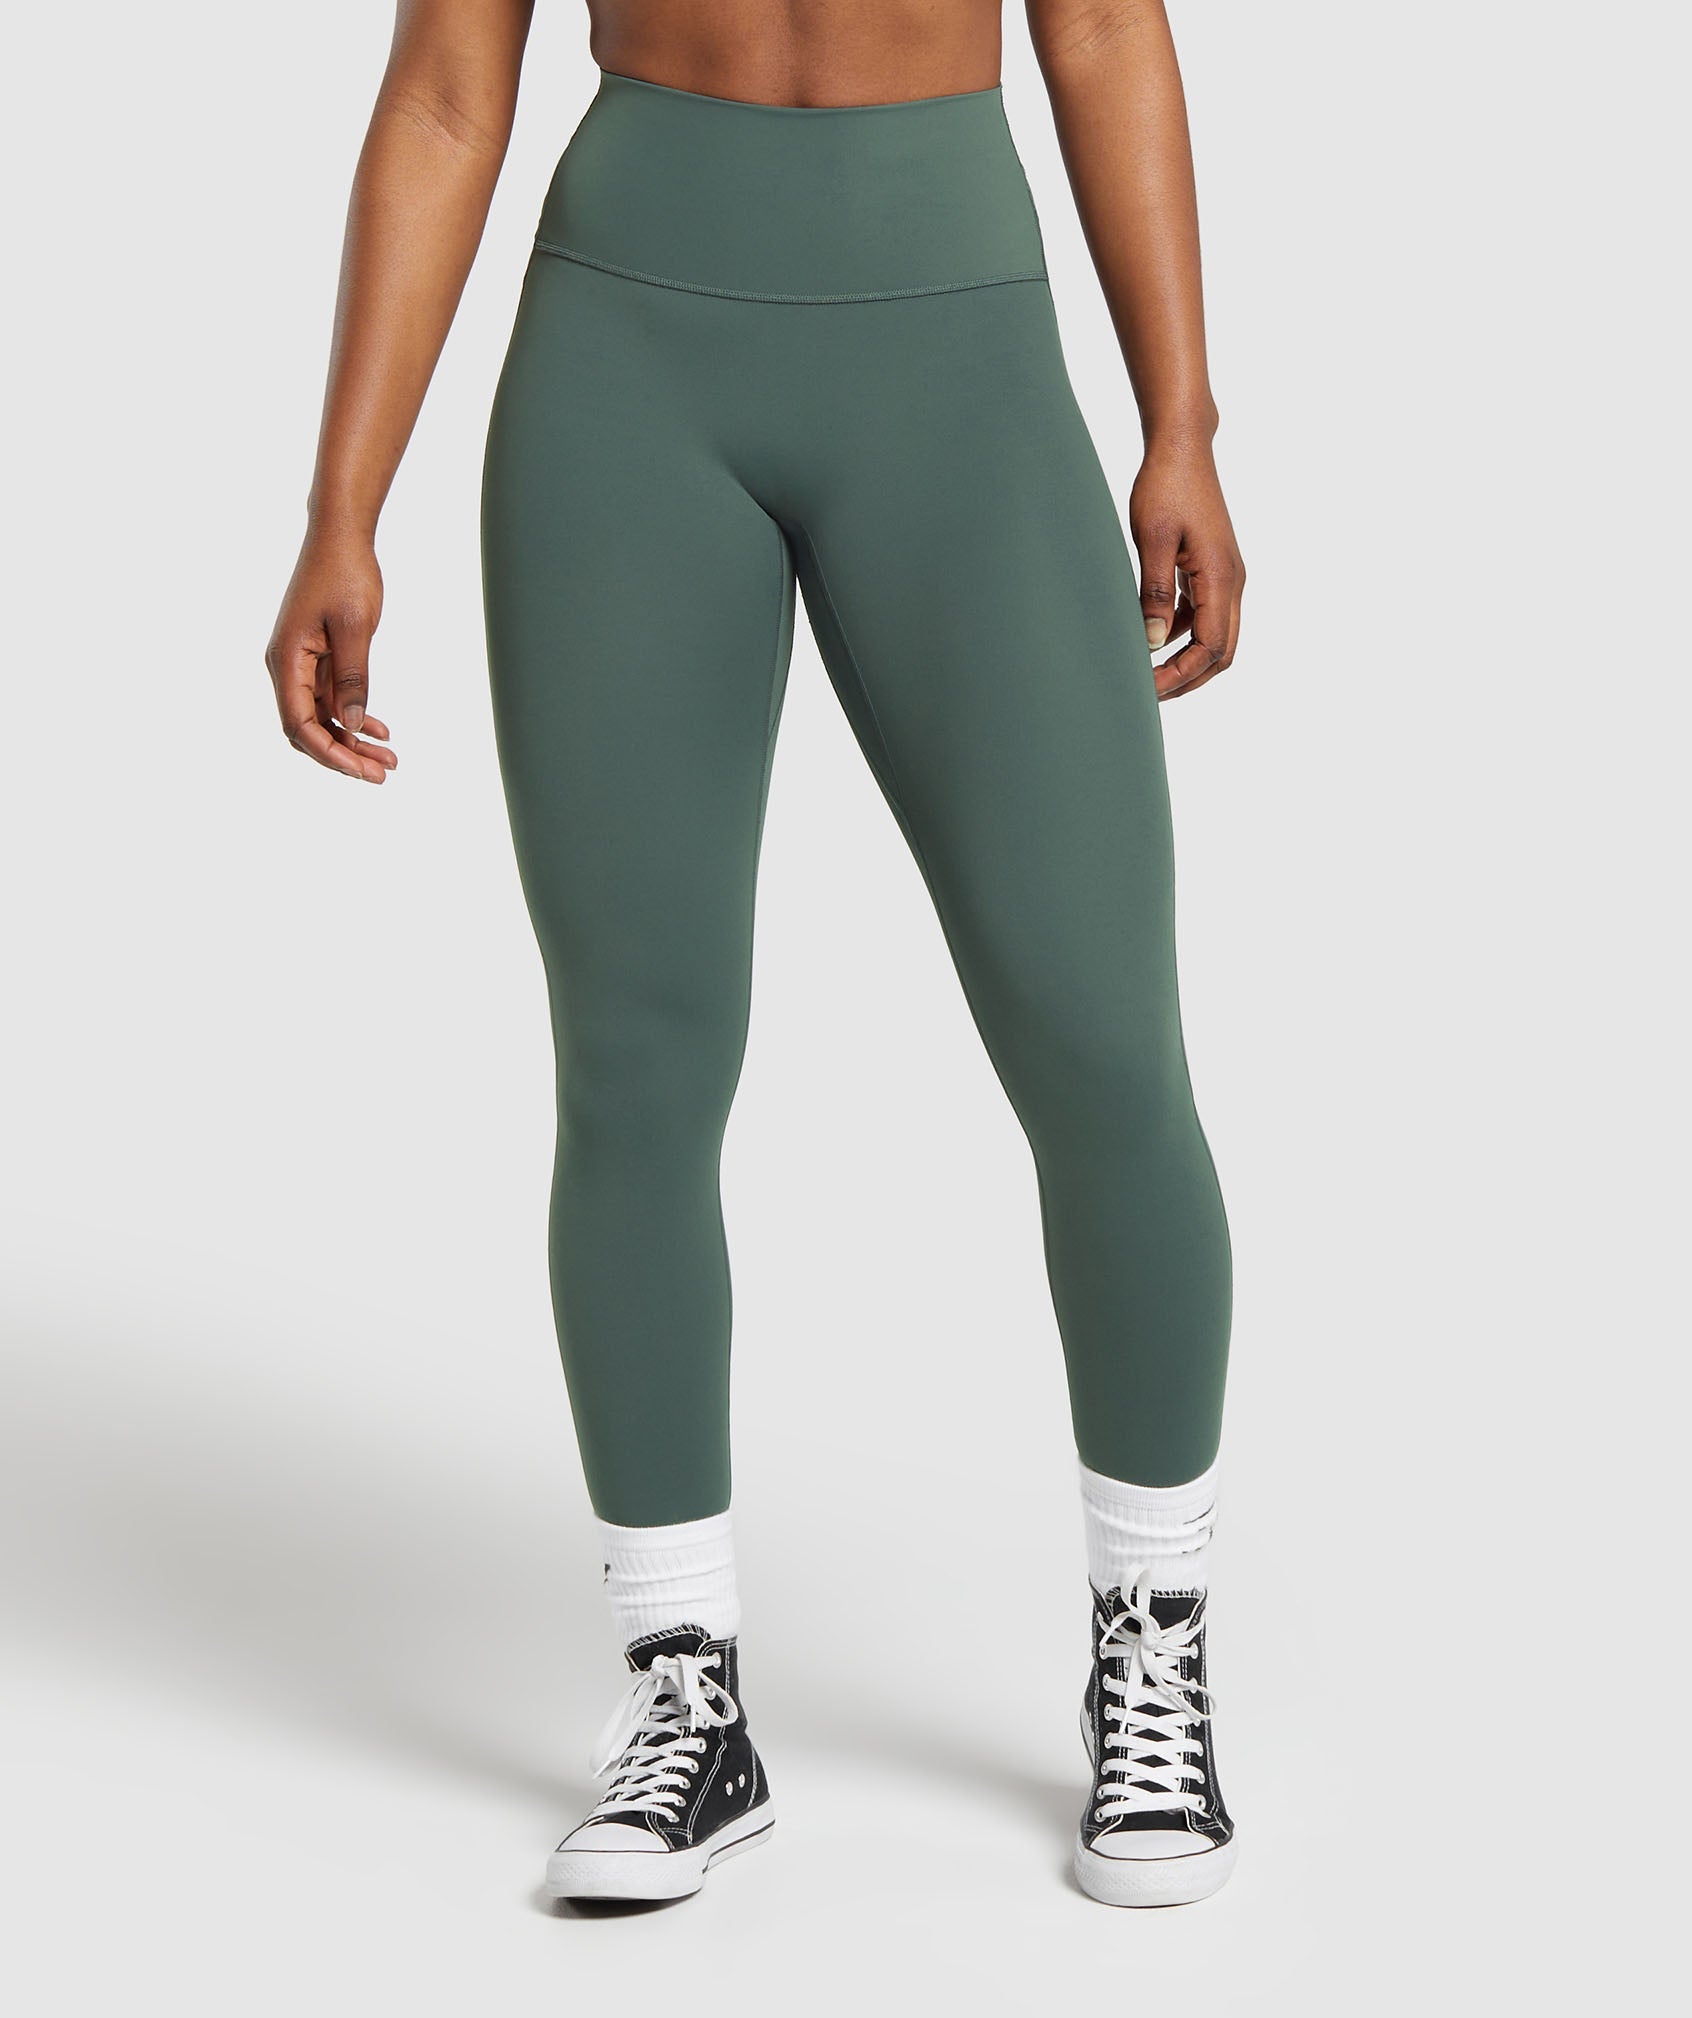 Nike, Pants & Jumpsuits, Nike Womens Legasee Just Do It Khaki Olive Green Running  Tights Leggings Xs